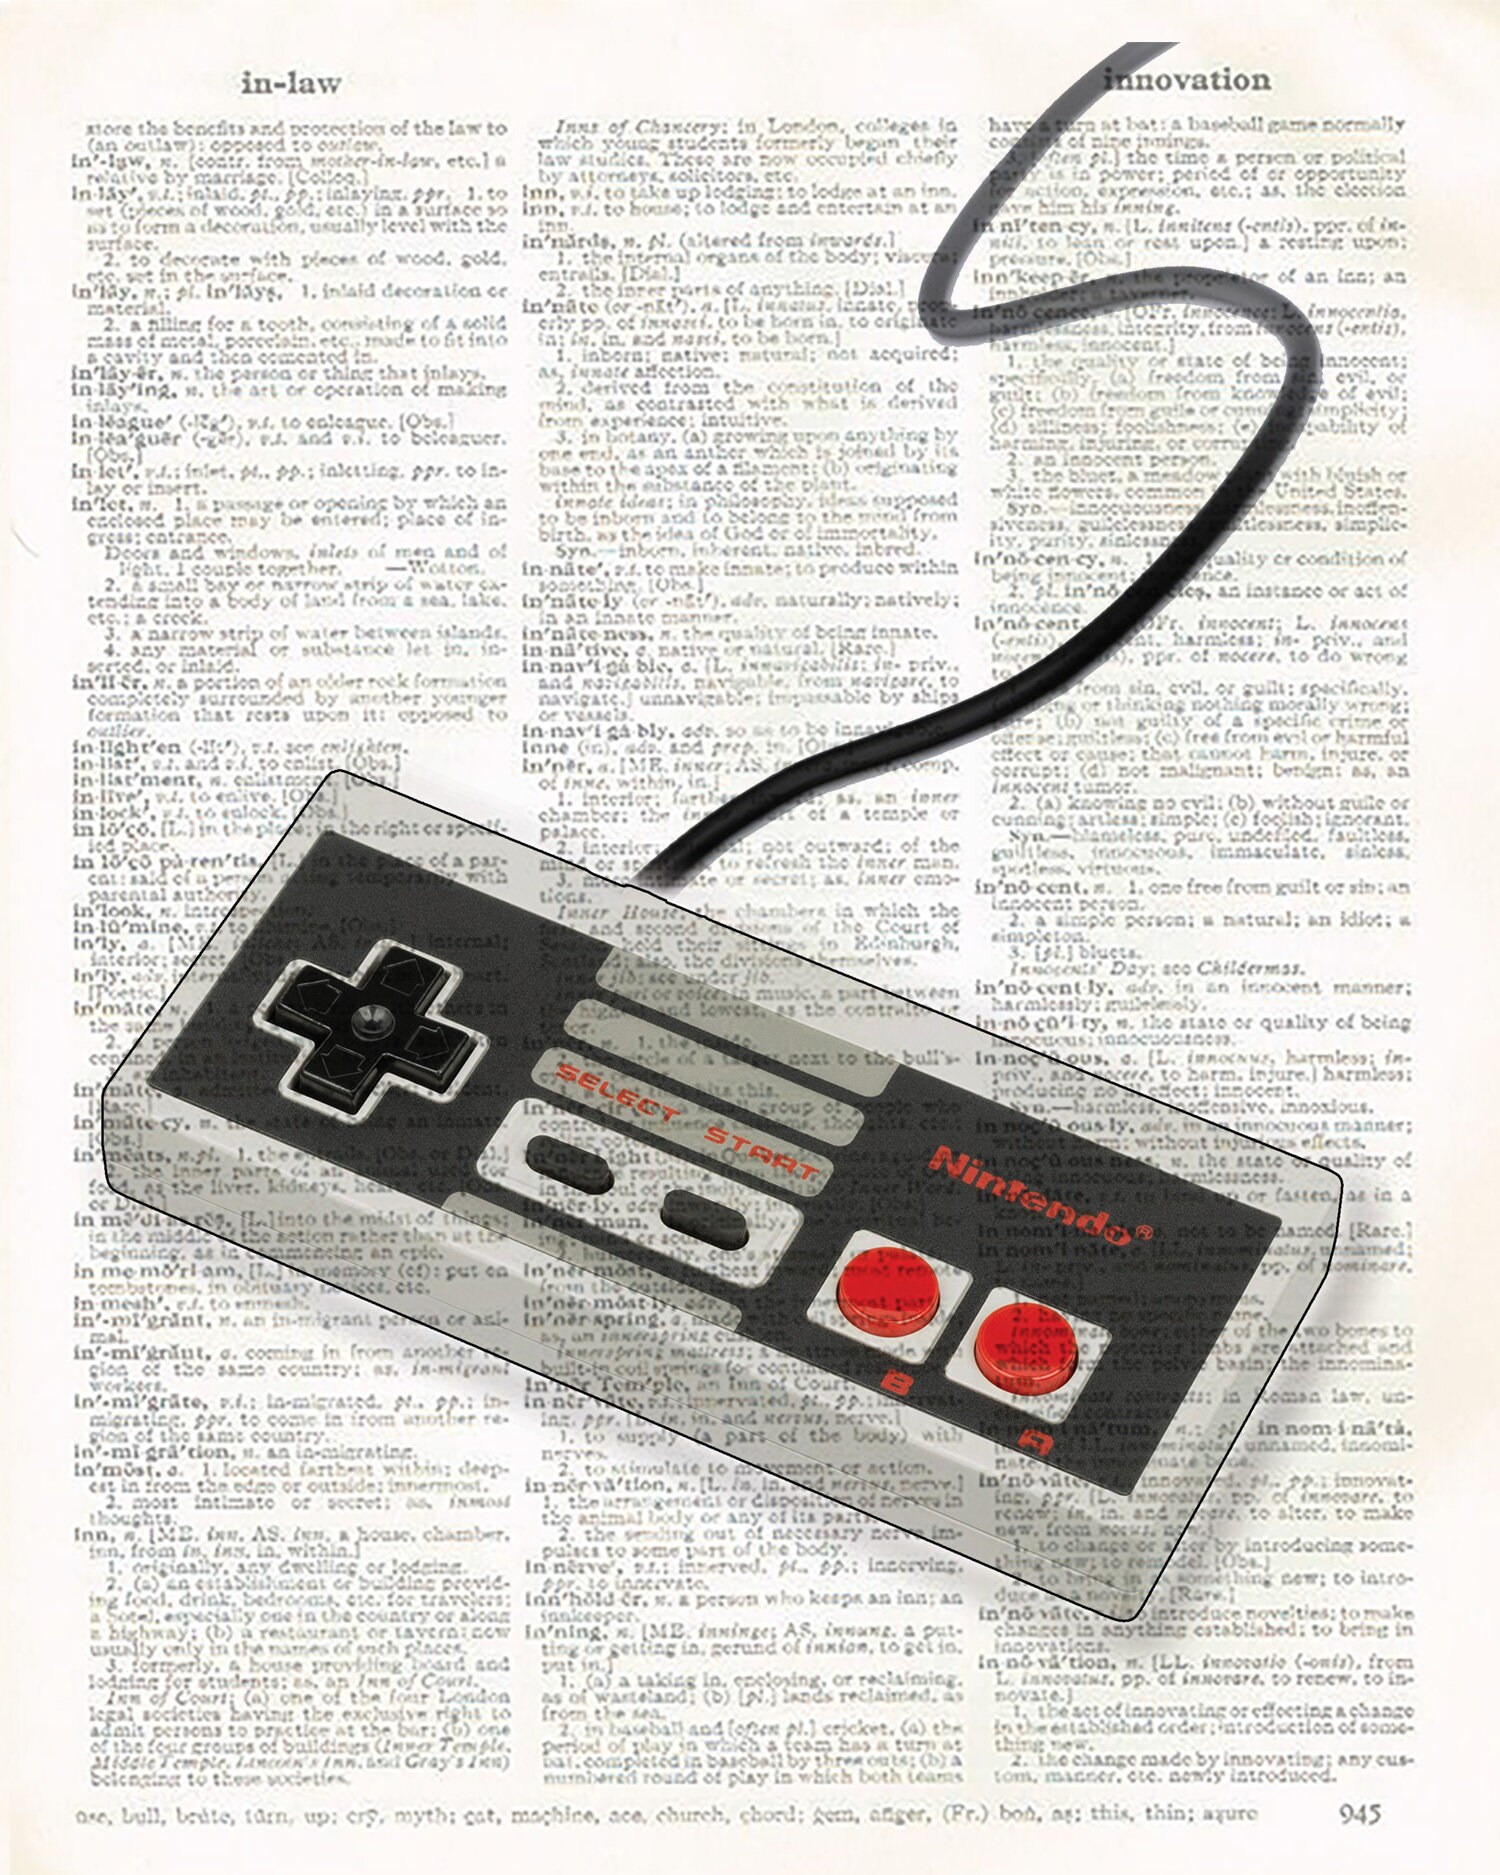 Manette Rétro NES-USB  Retro Nintendo USB Controller - CoolGift